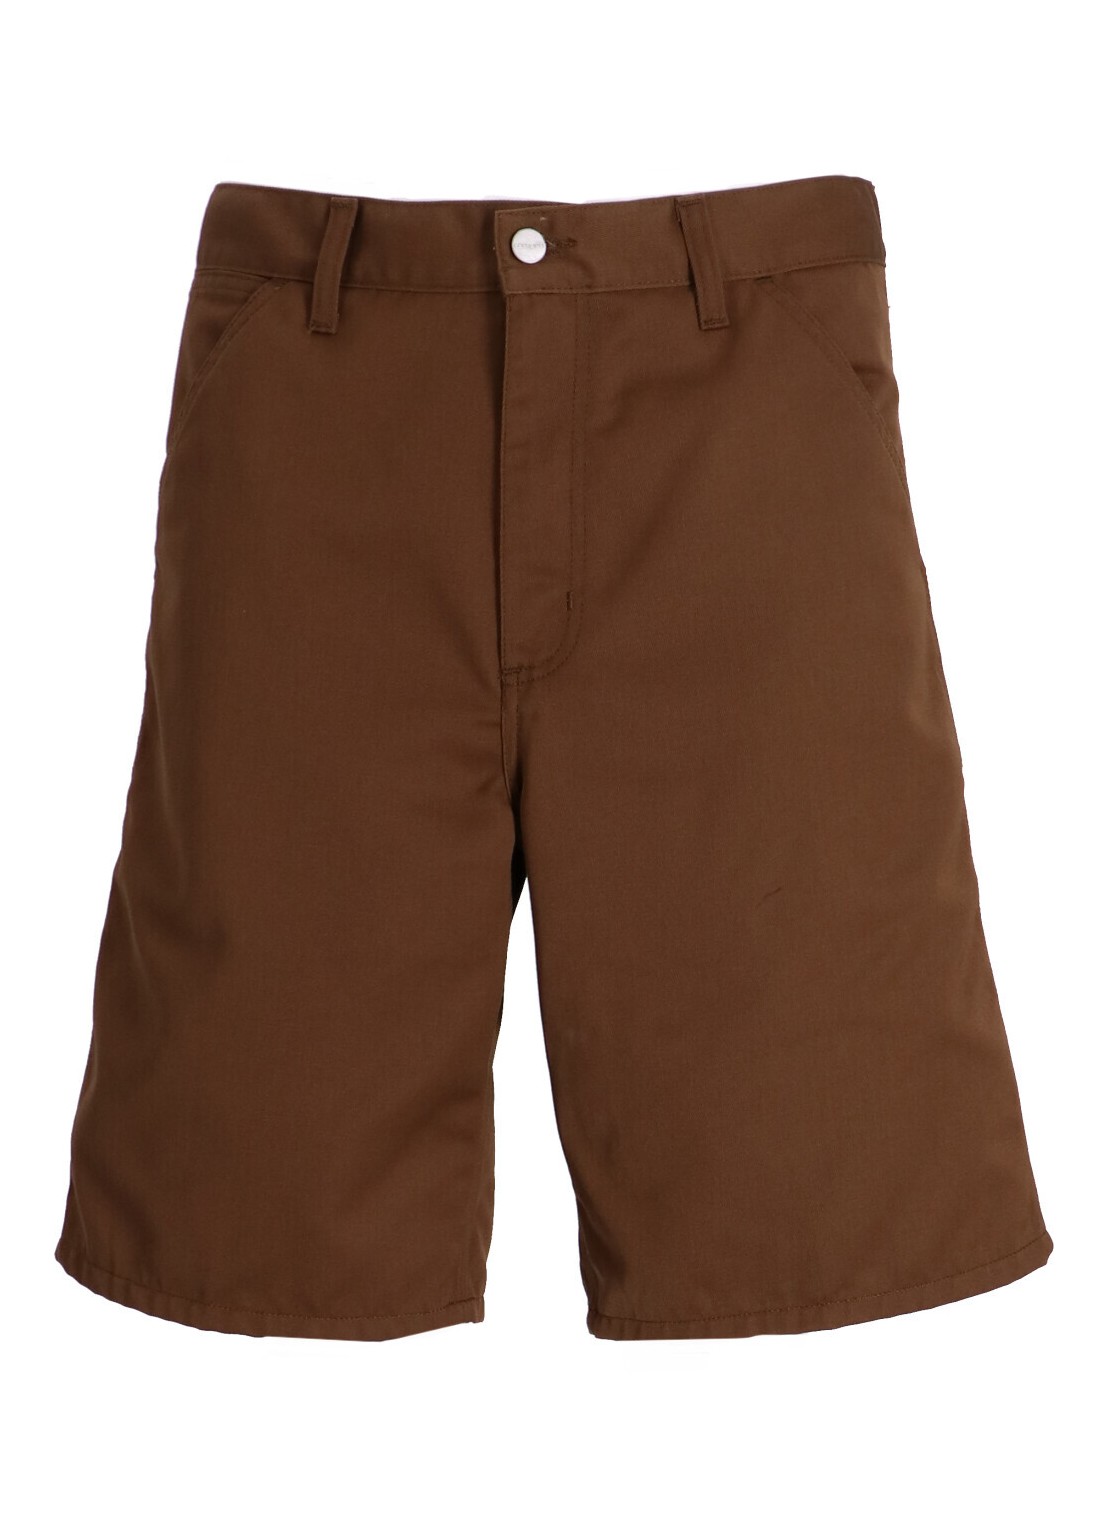 Pantalon corto carhartt short pant mansimple short - i031496 1zd02 talla 32
 